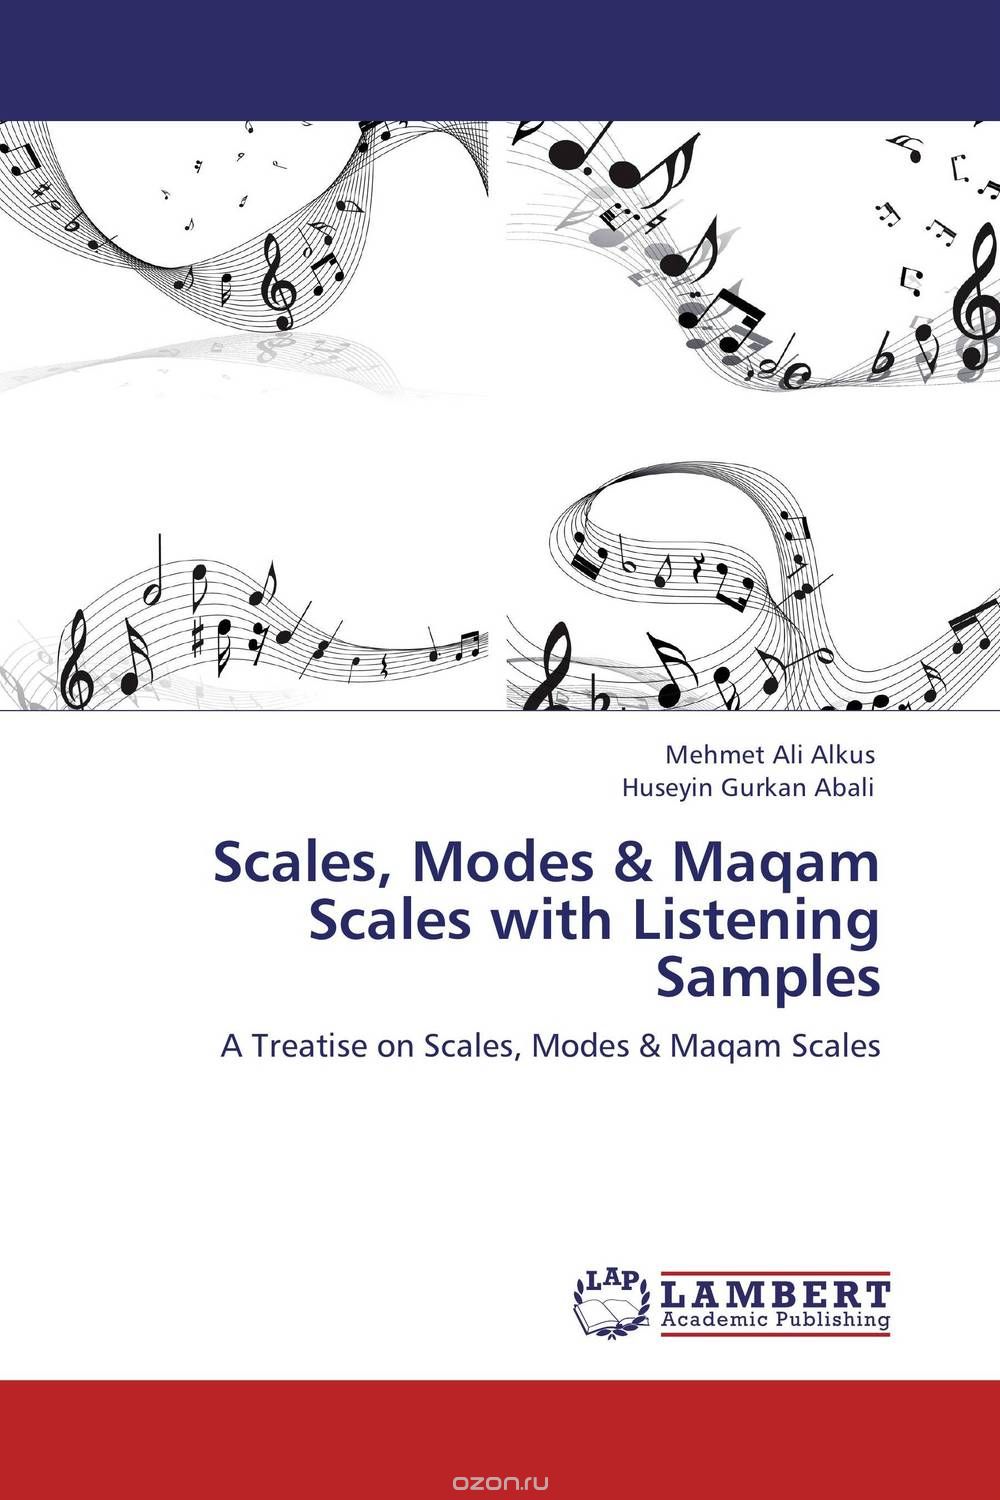 Скачать книгу "Scales, Modes & Maqam Scales with Listening Samples"